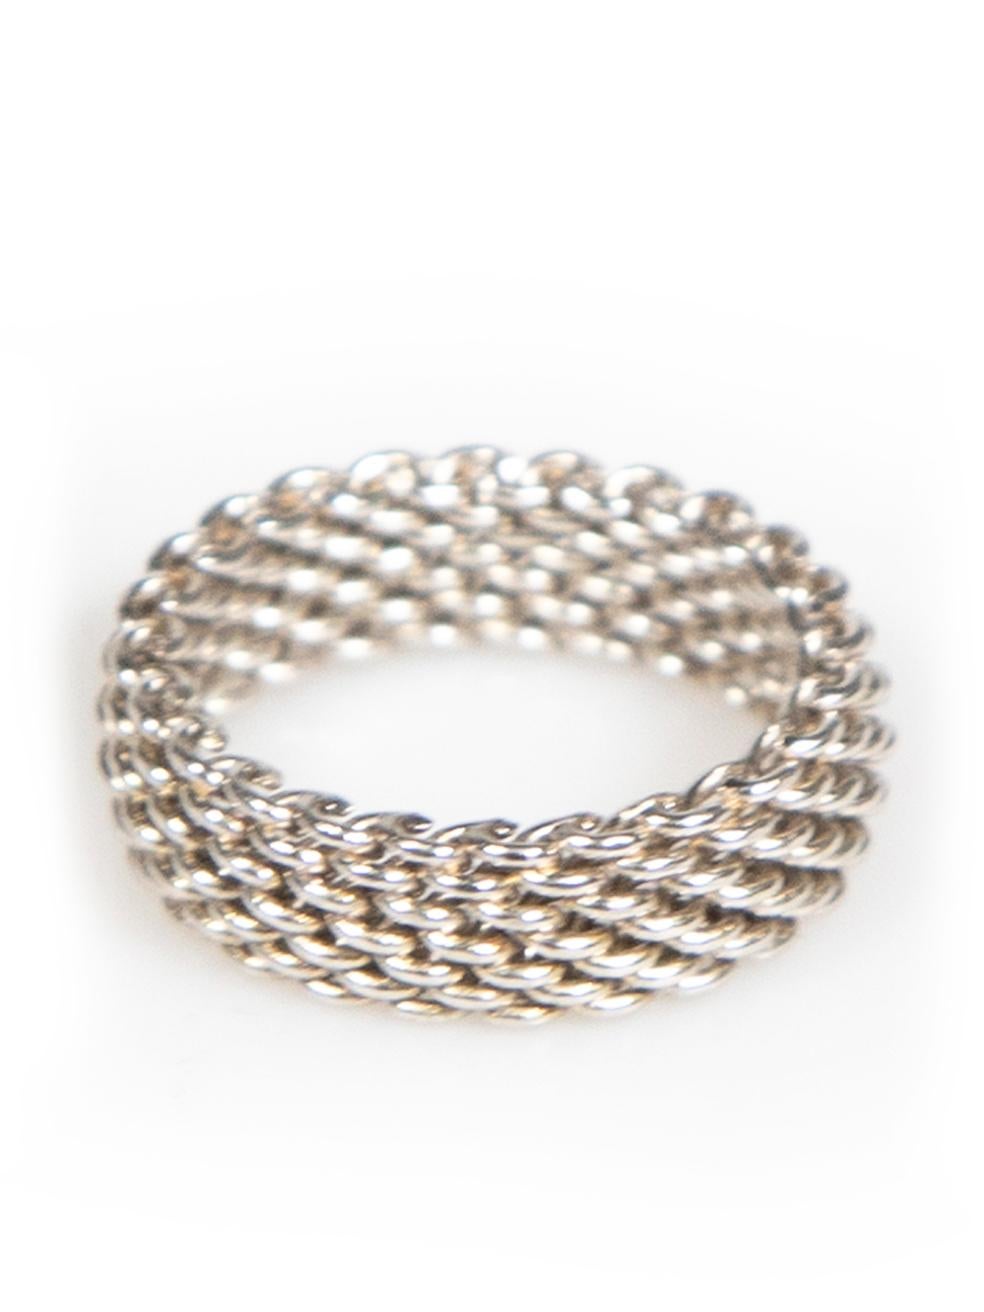 sterling silver mesh ring